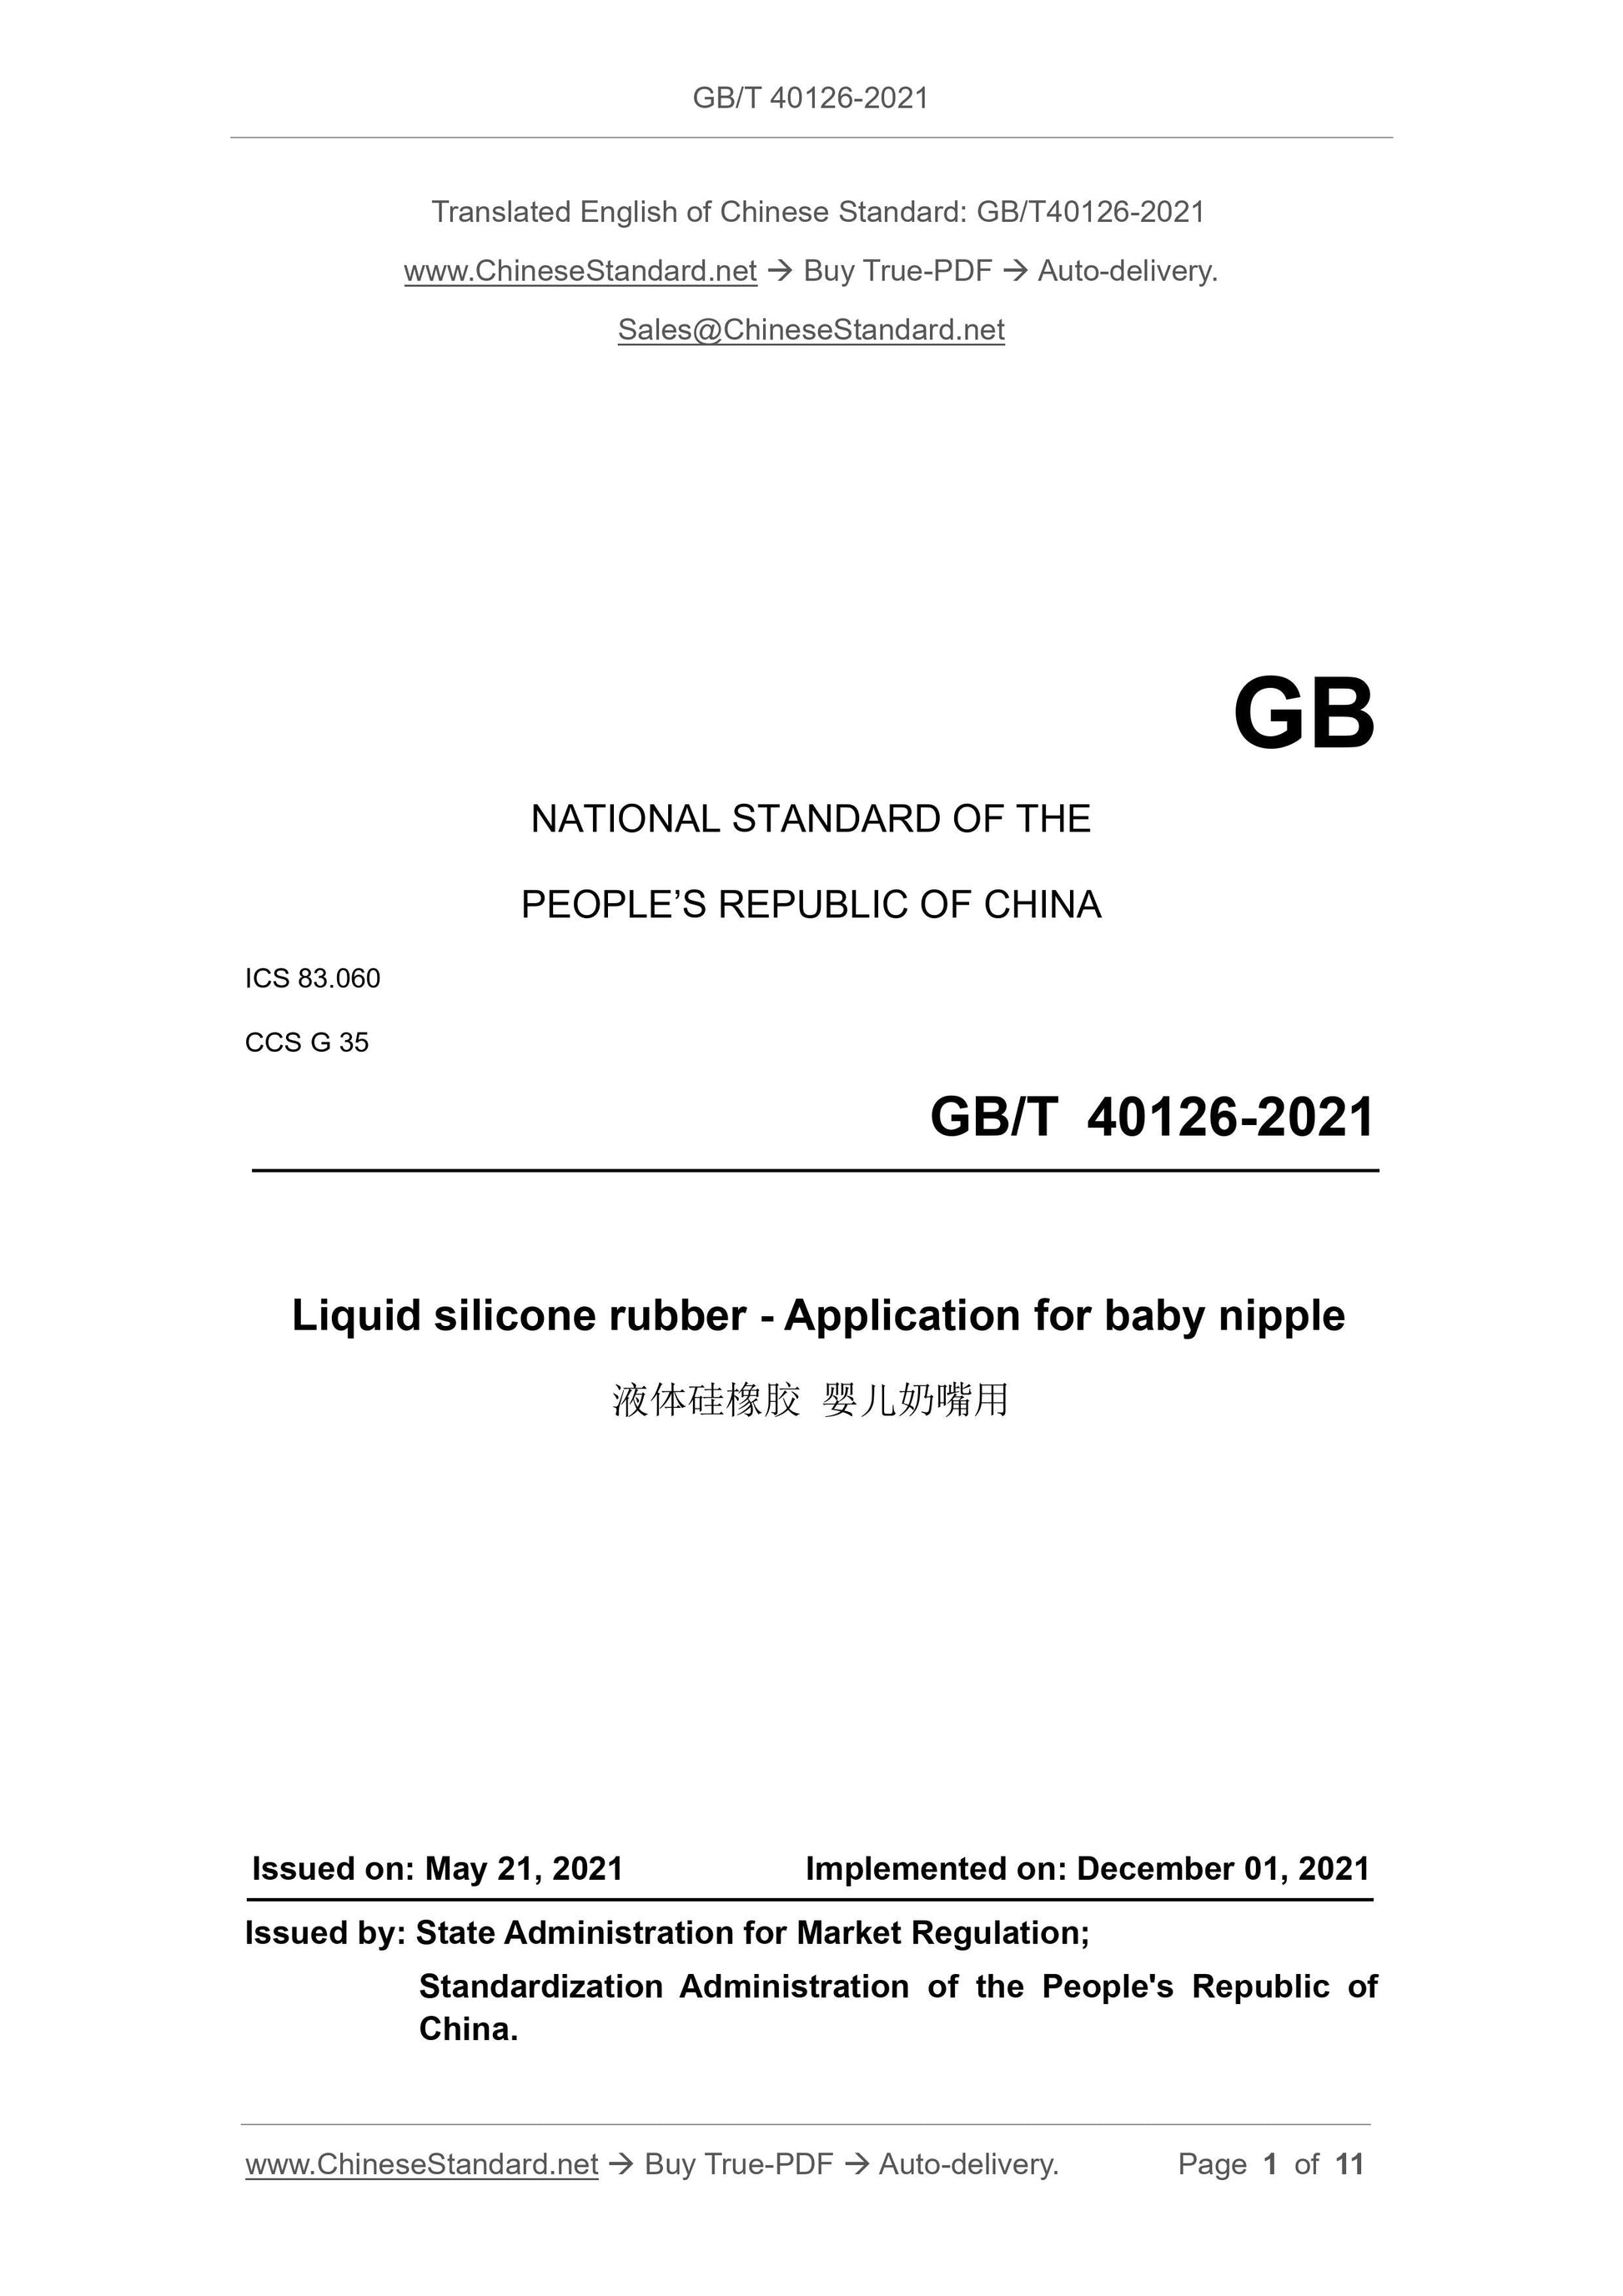 GBT40126-2021 Page 1